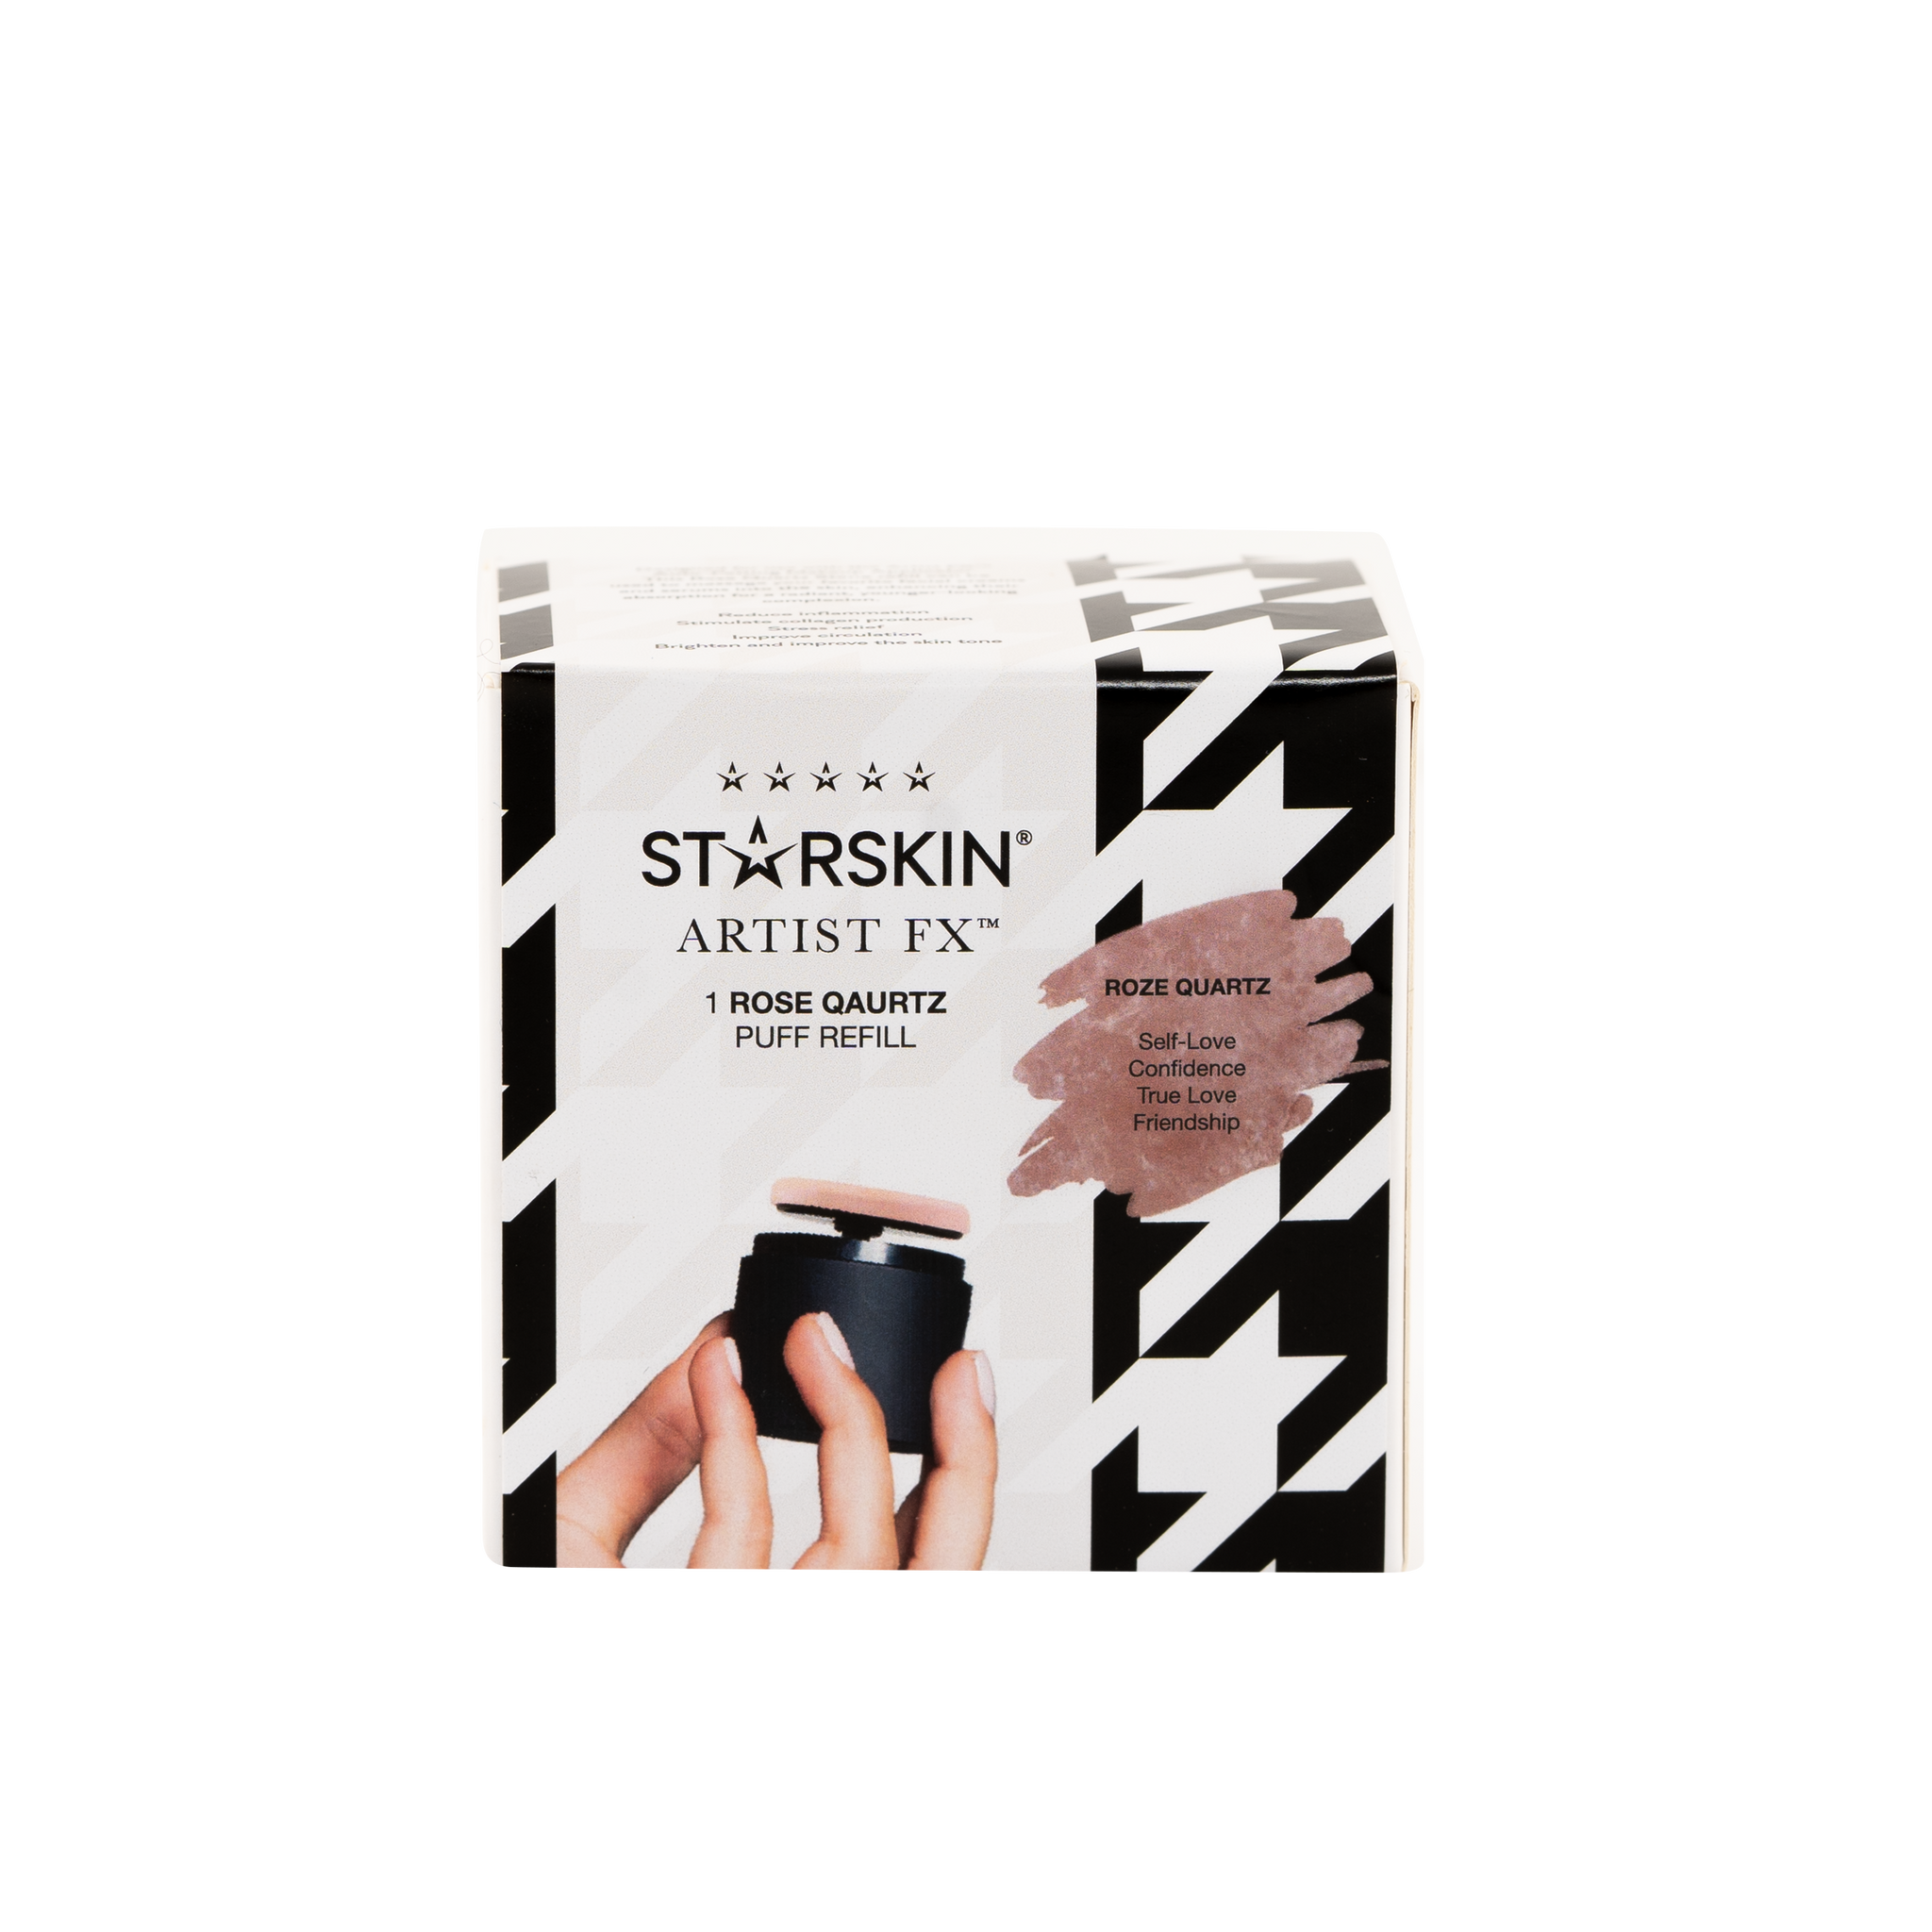 SkinIron Artist FX Rose Quartz stone From Starskin product picture box front